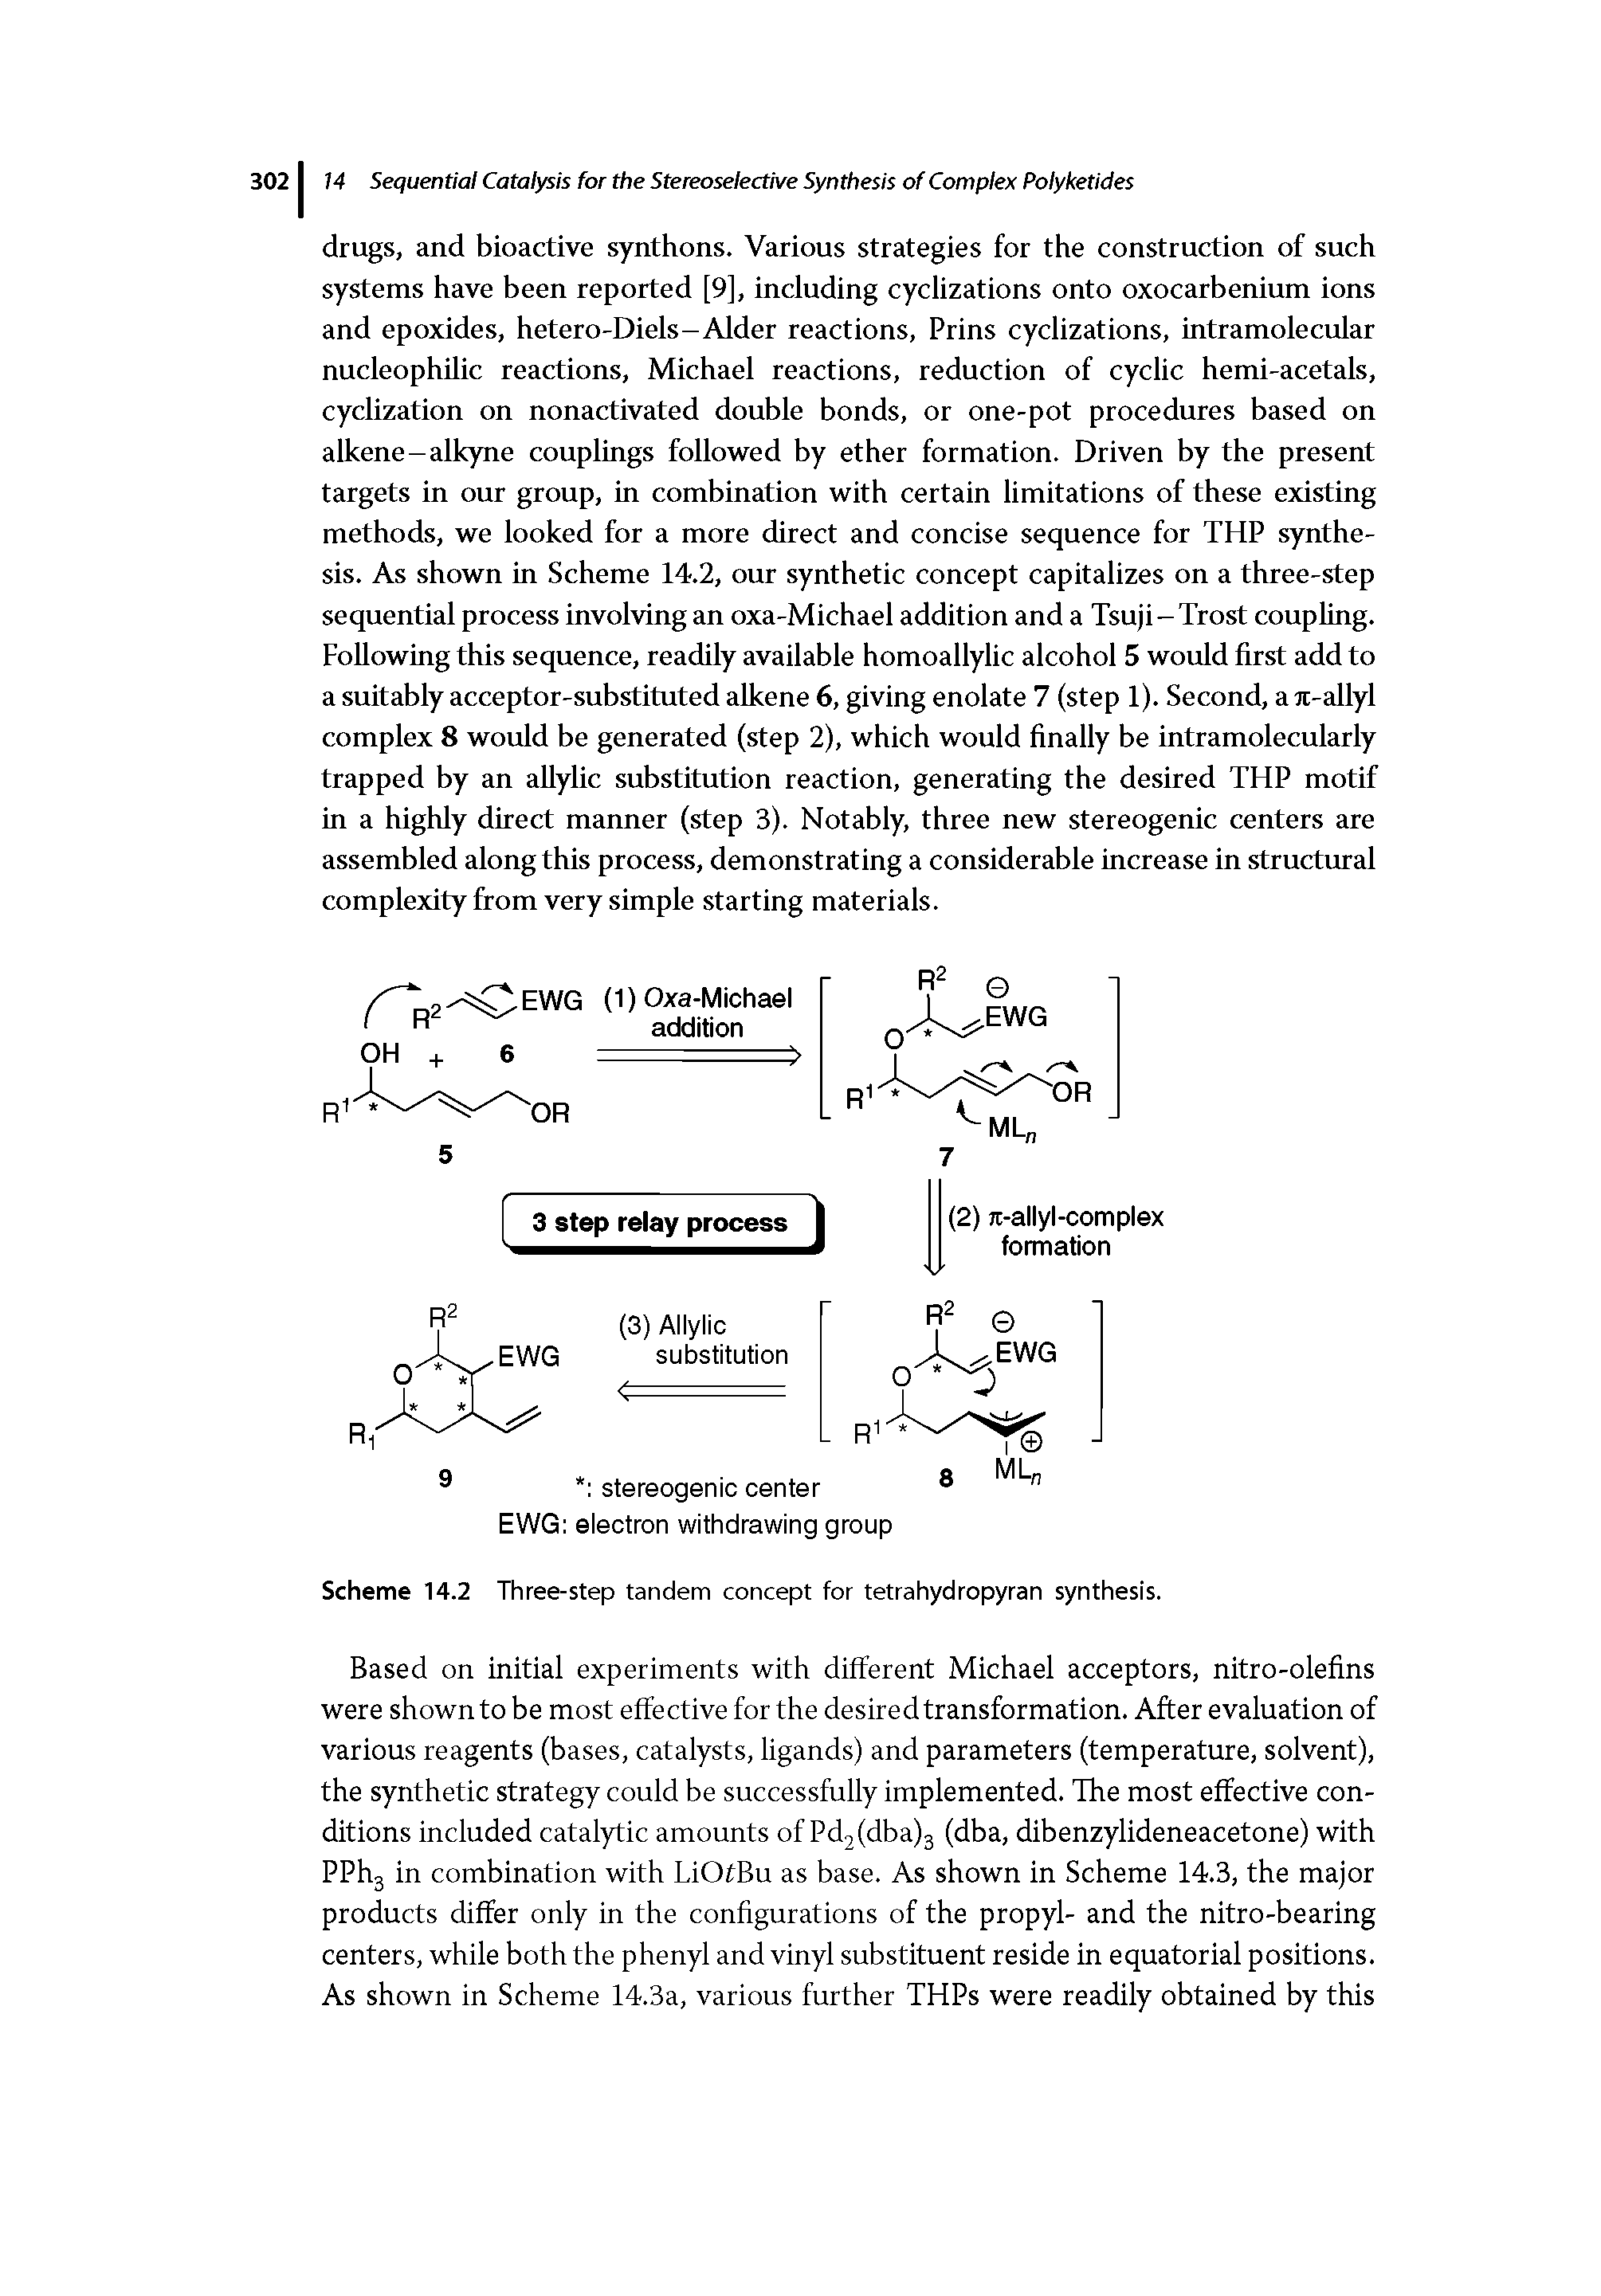 Scheme 14.2 Three-step tandem concept for tetrahydropyran synthesis.